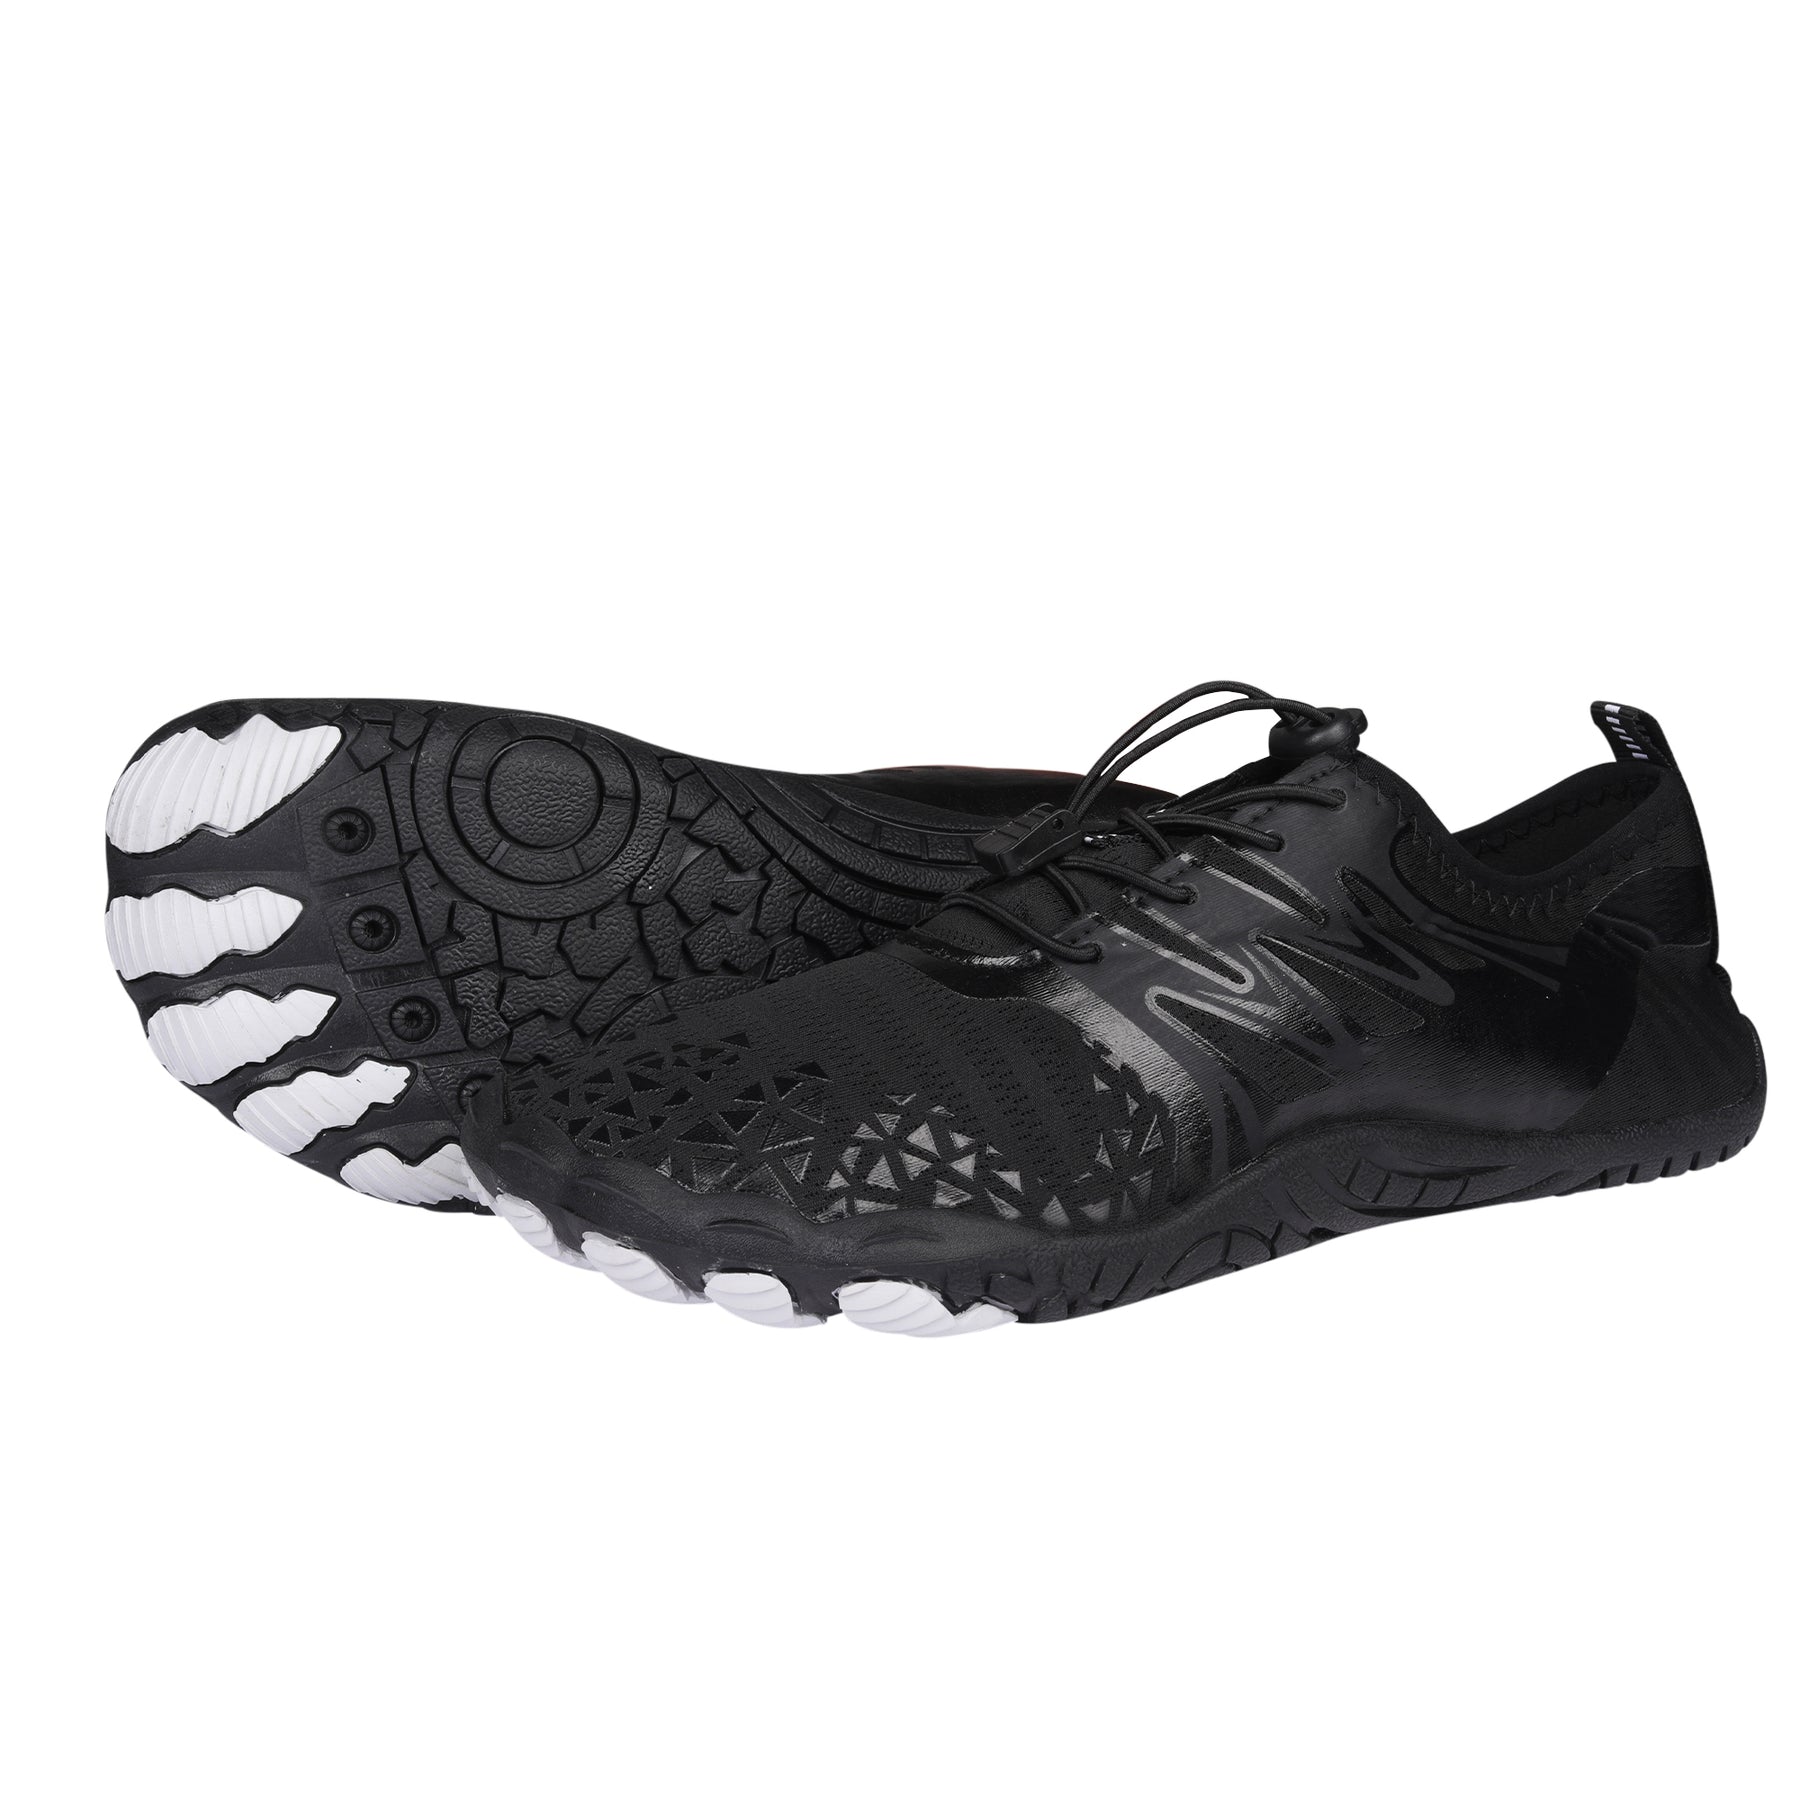 ANDUNE Men’s Barefoot & Minimalist Cross Training Shoes – Ultra Light Carbon Blaze